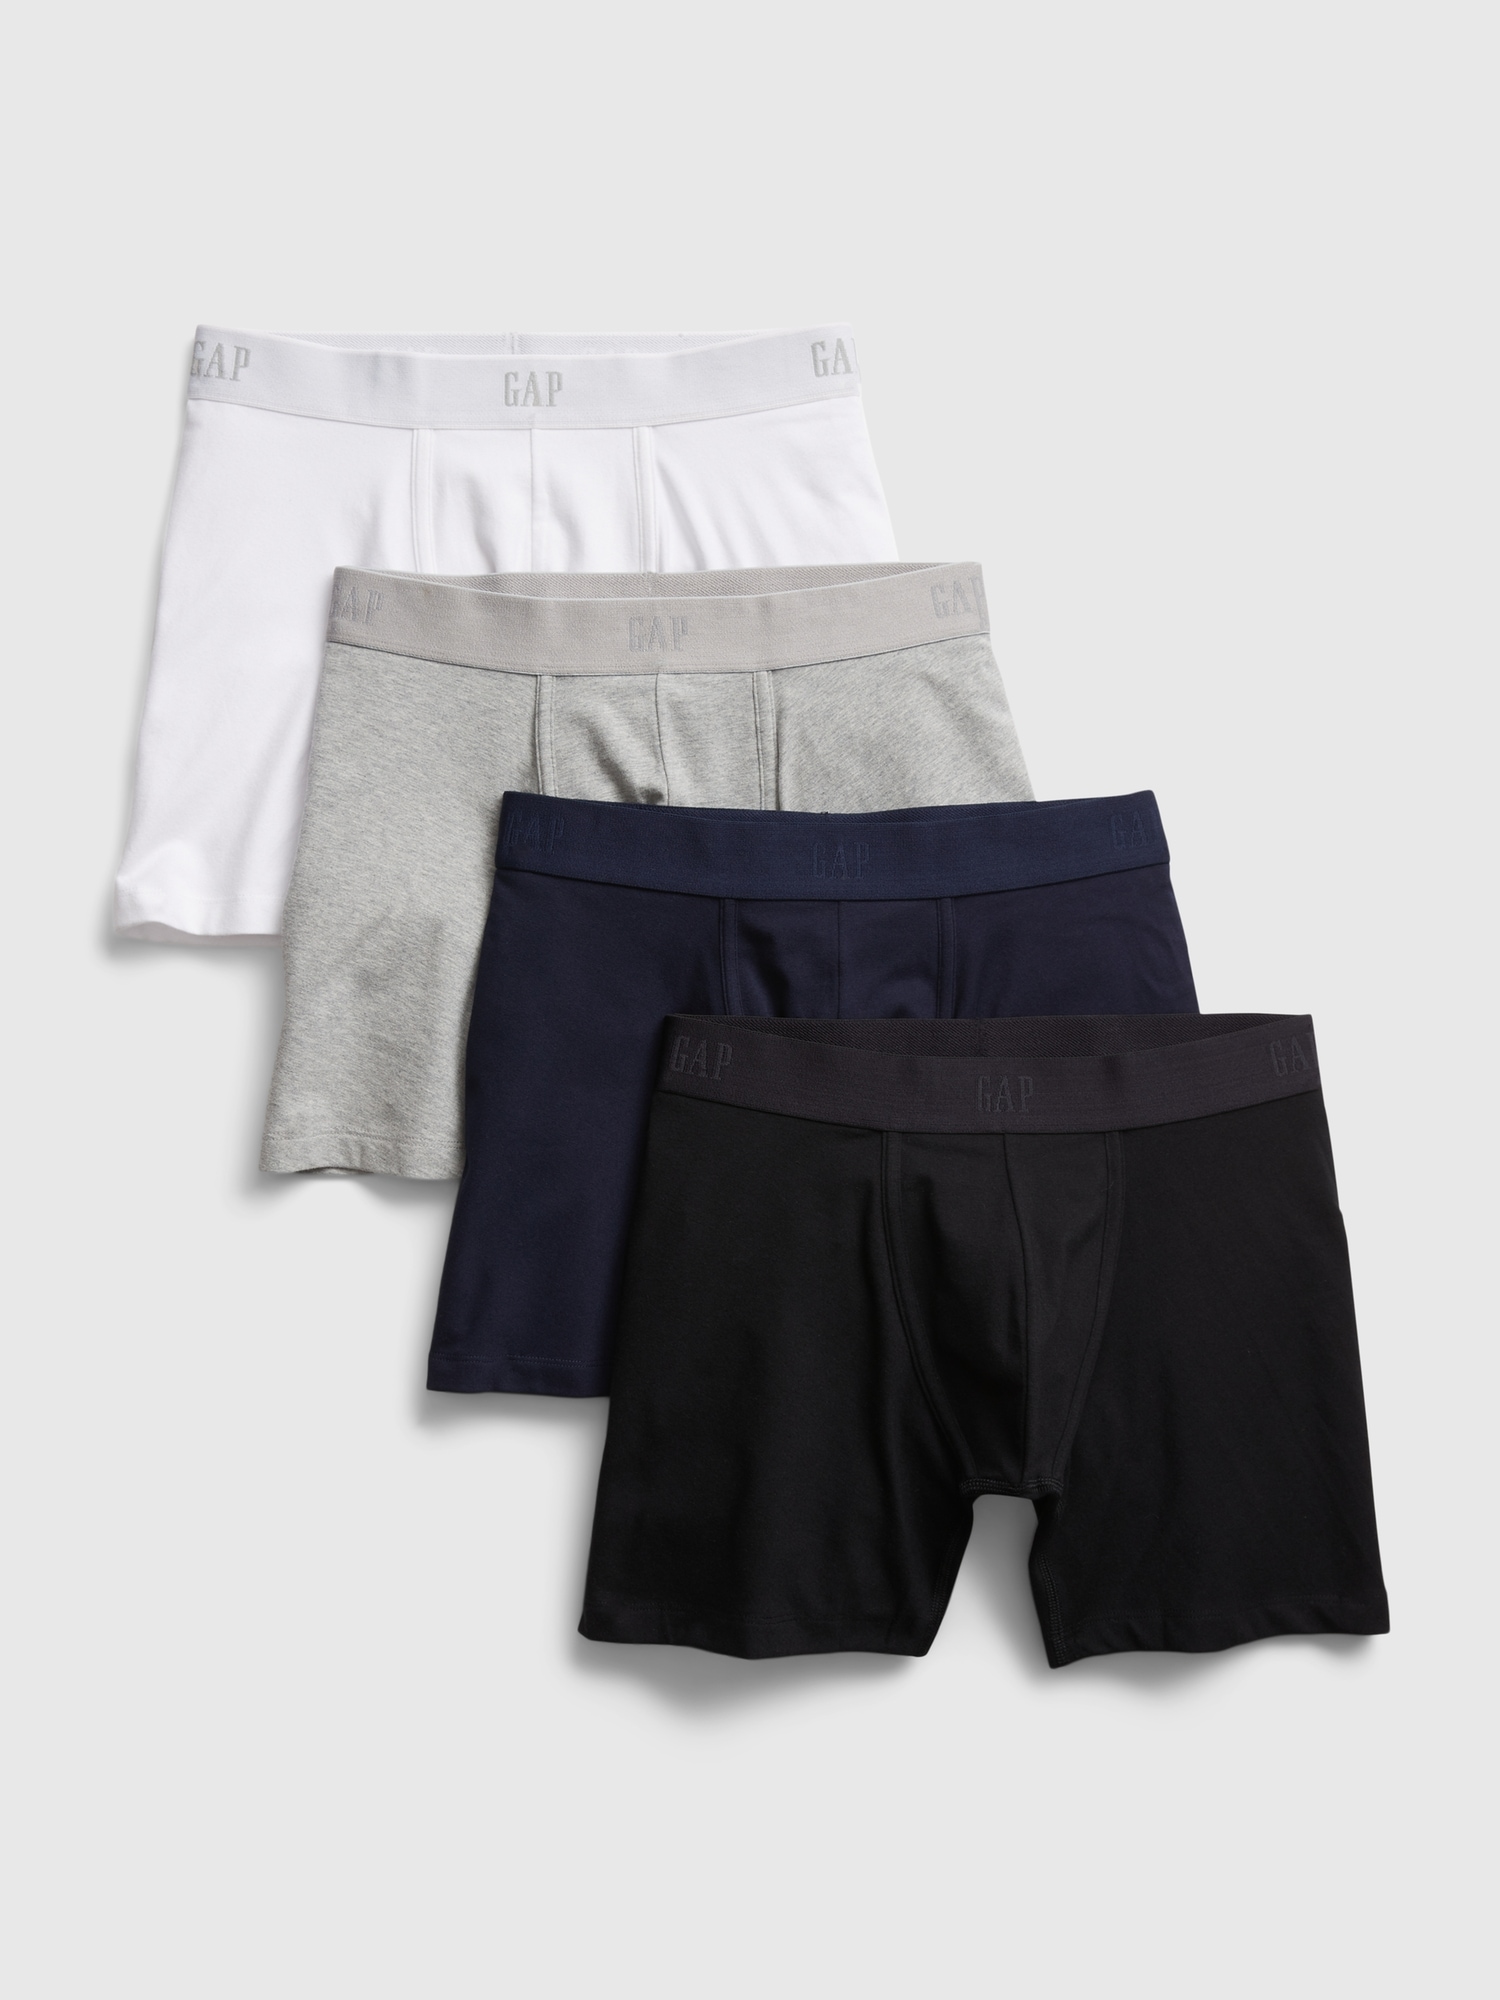 Assorted Color Underwear Packs - Underwear - MEN